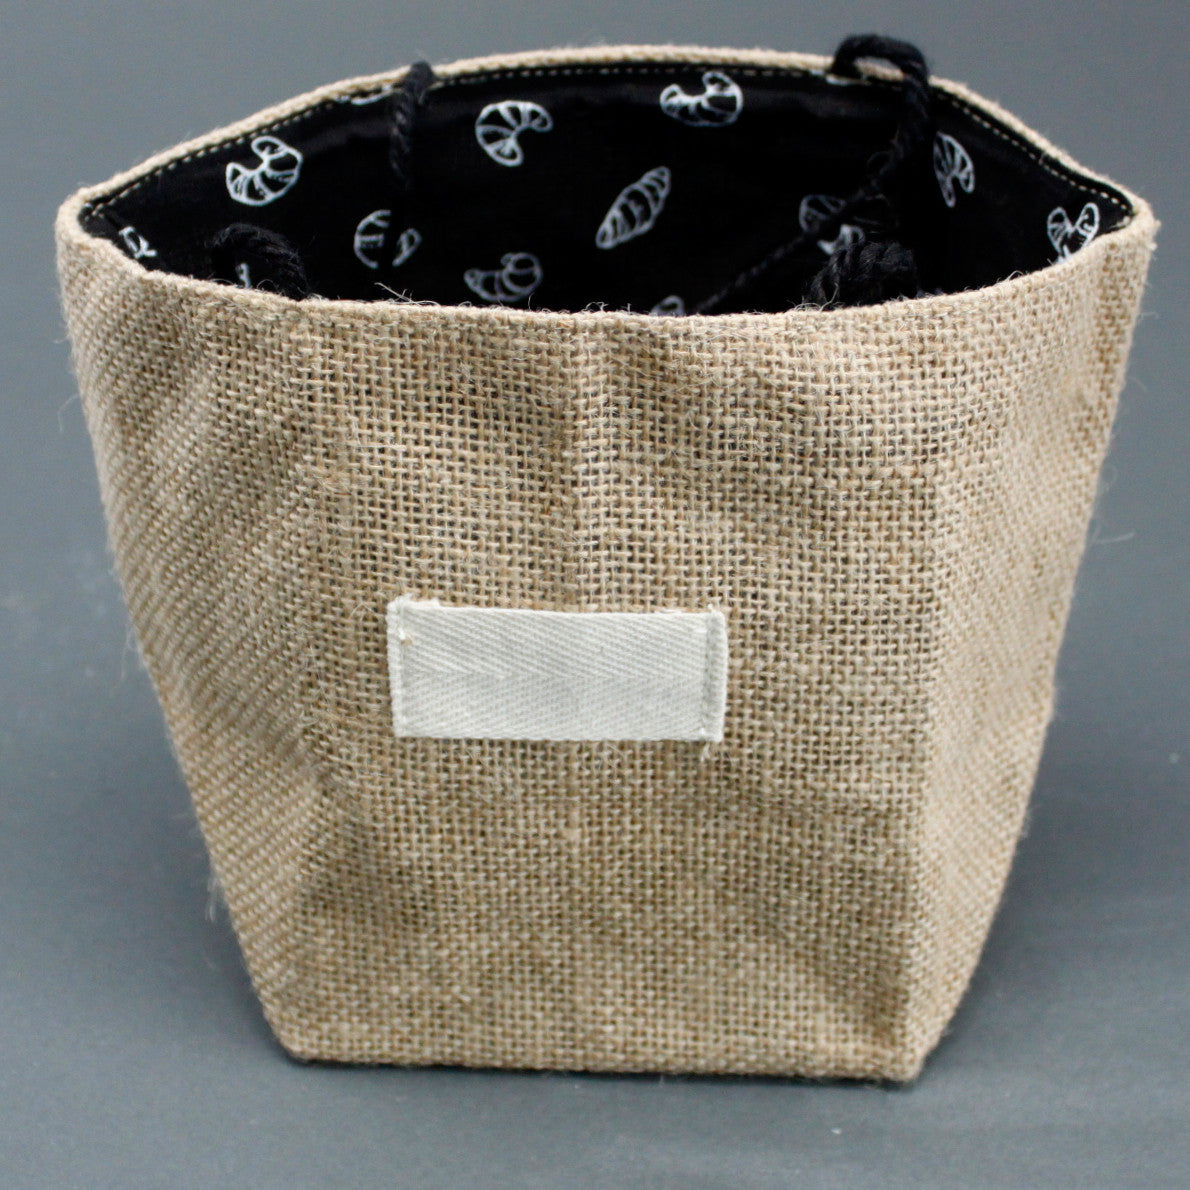 View Natural Jute Cotton Gift Bag Black Lining Large information